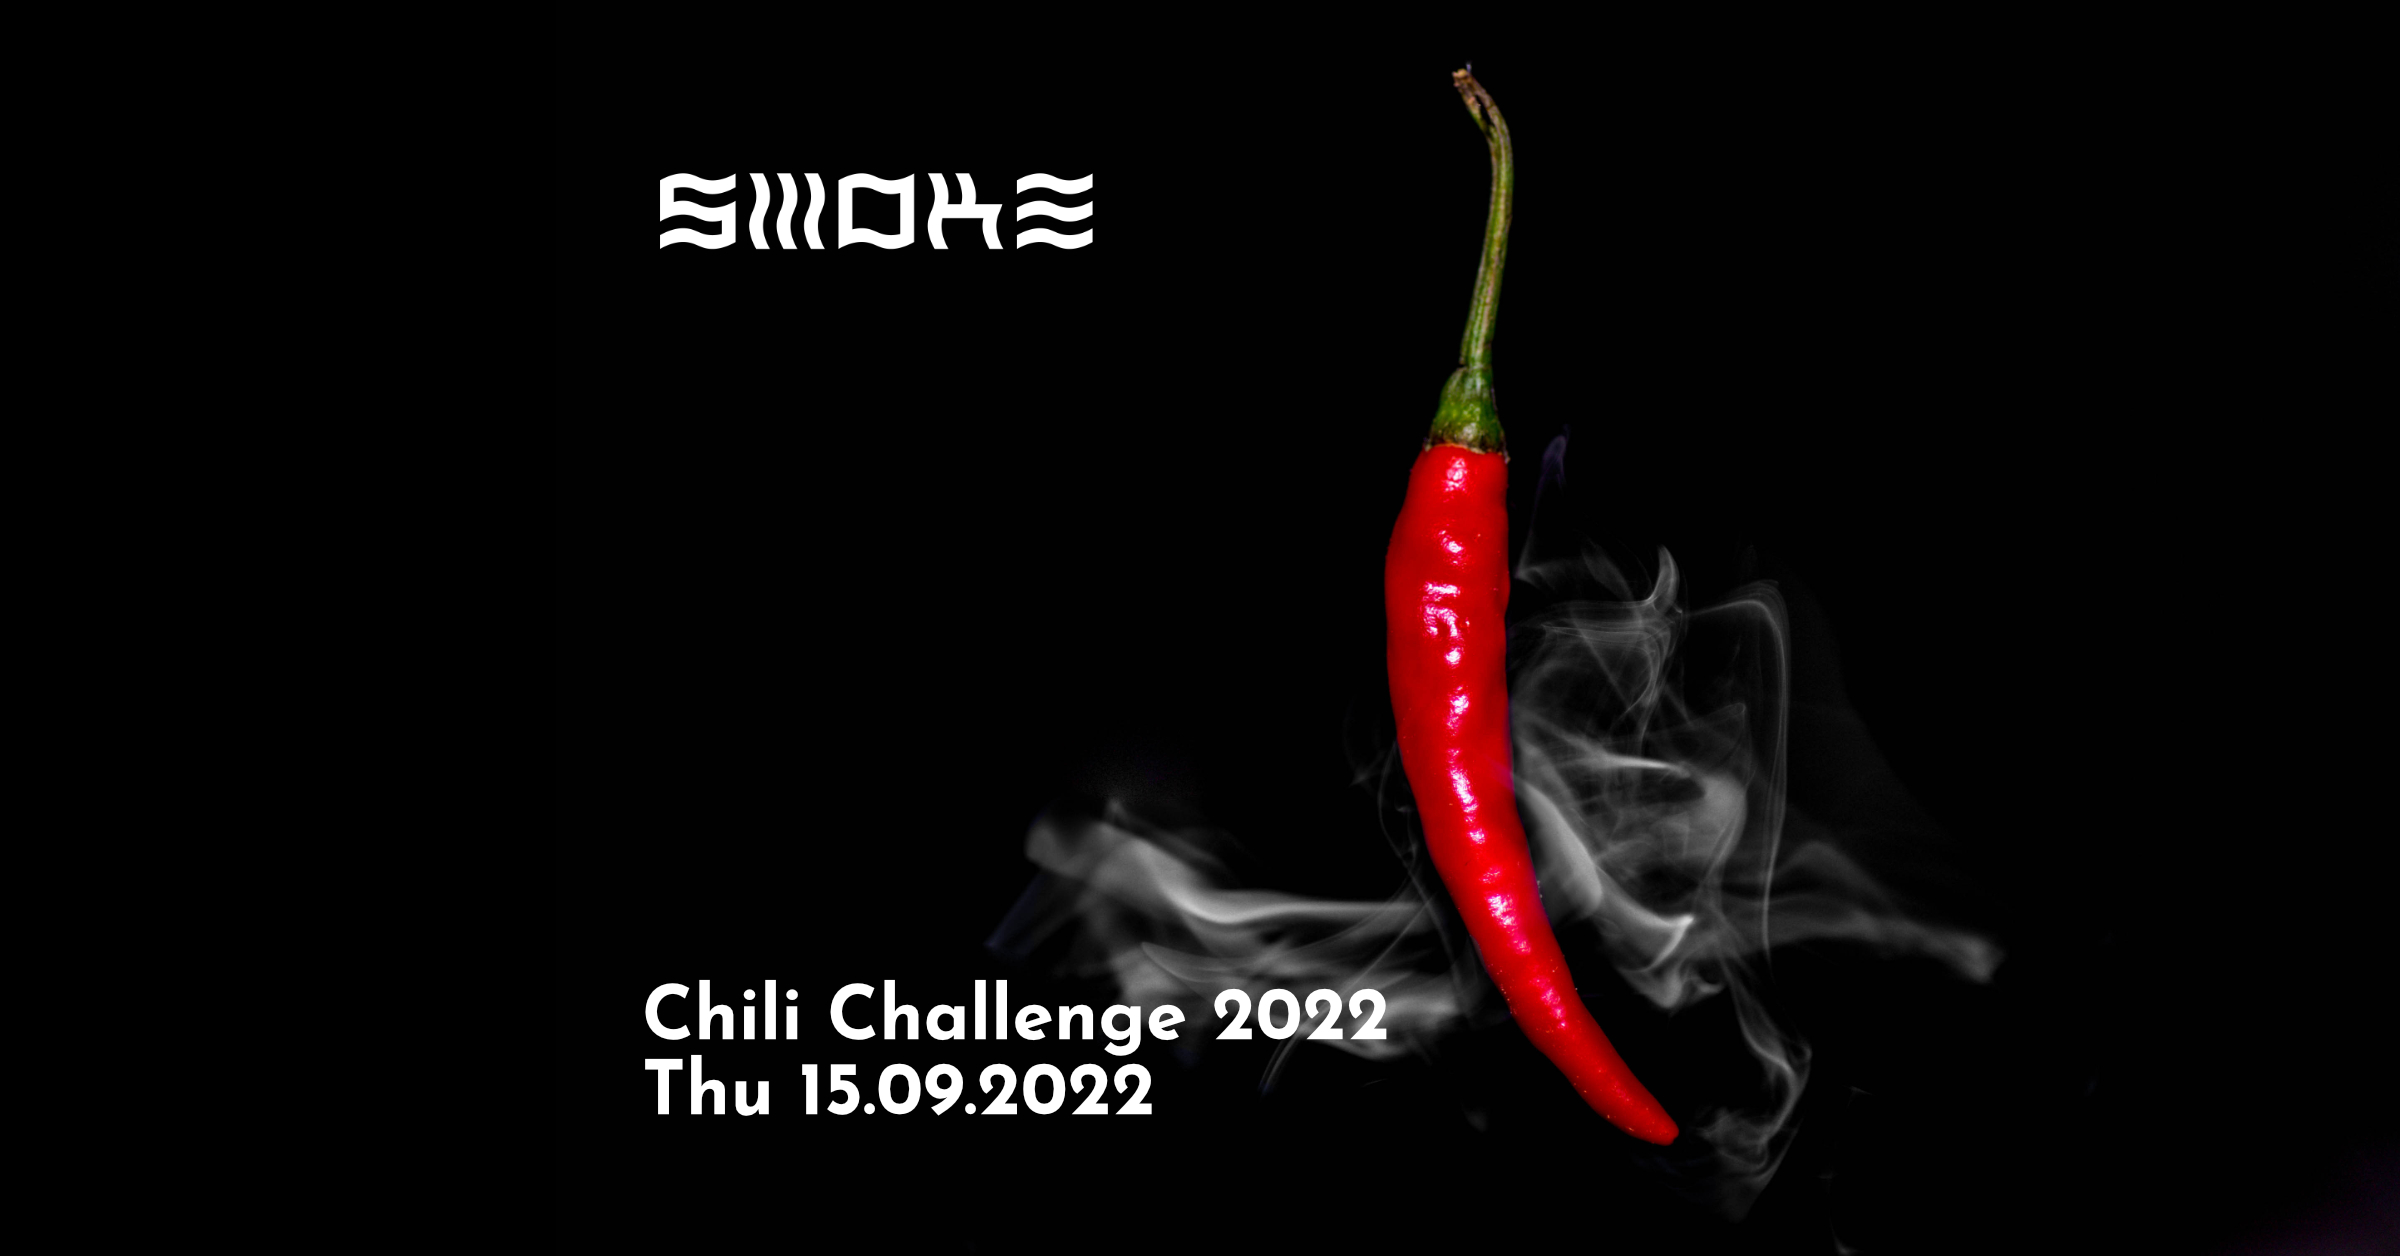 Smoke’s Chili Challenge 2022